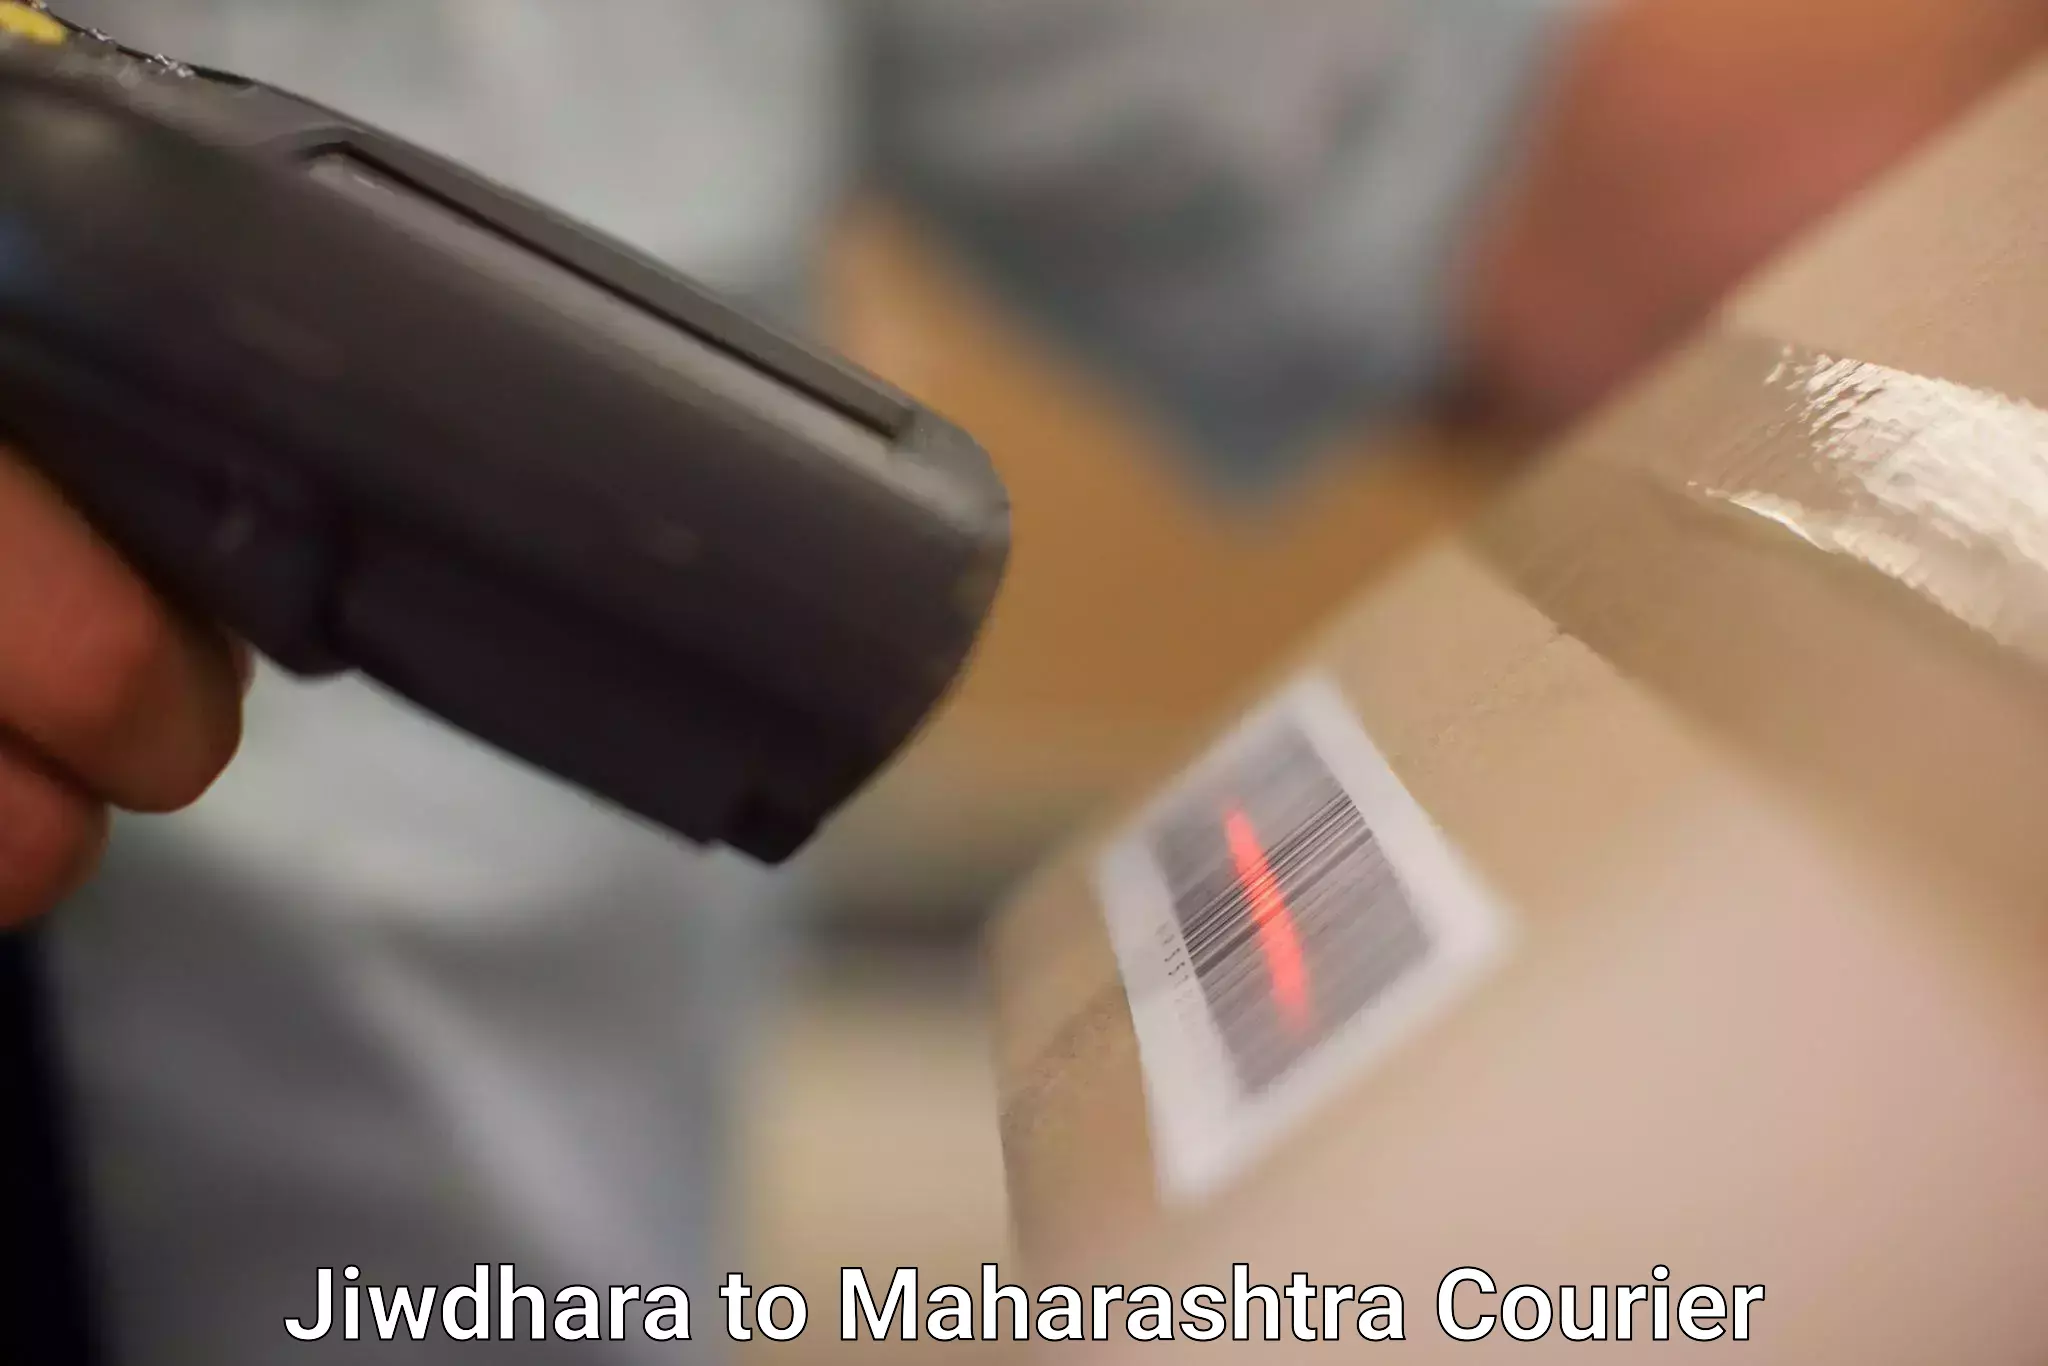 Professional courier handling Jiwdhara to DY Patil Vidyapeeth Pune